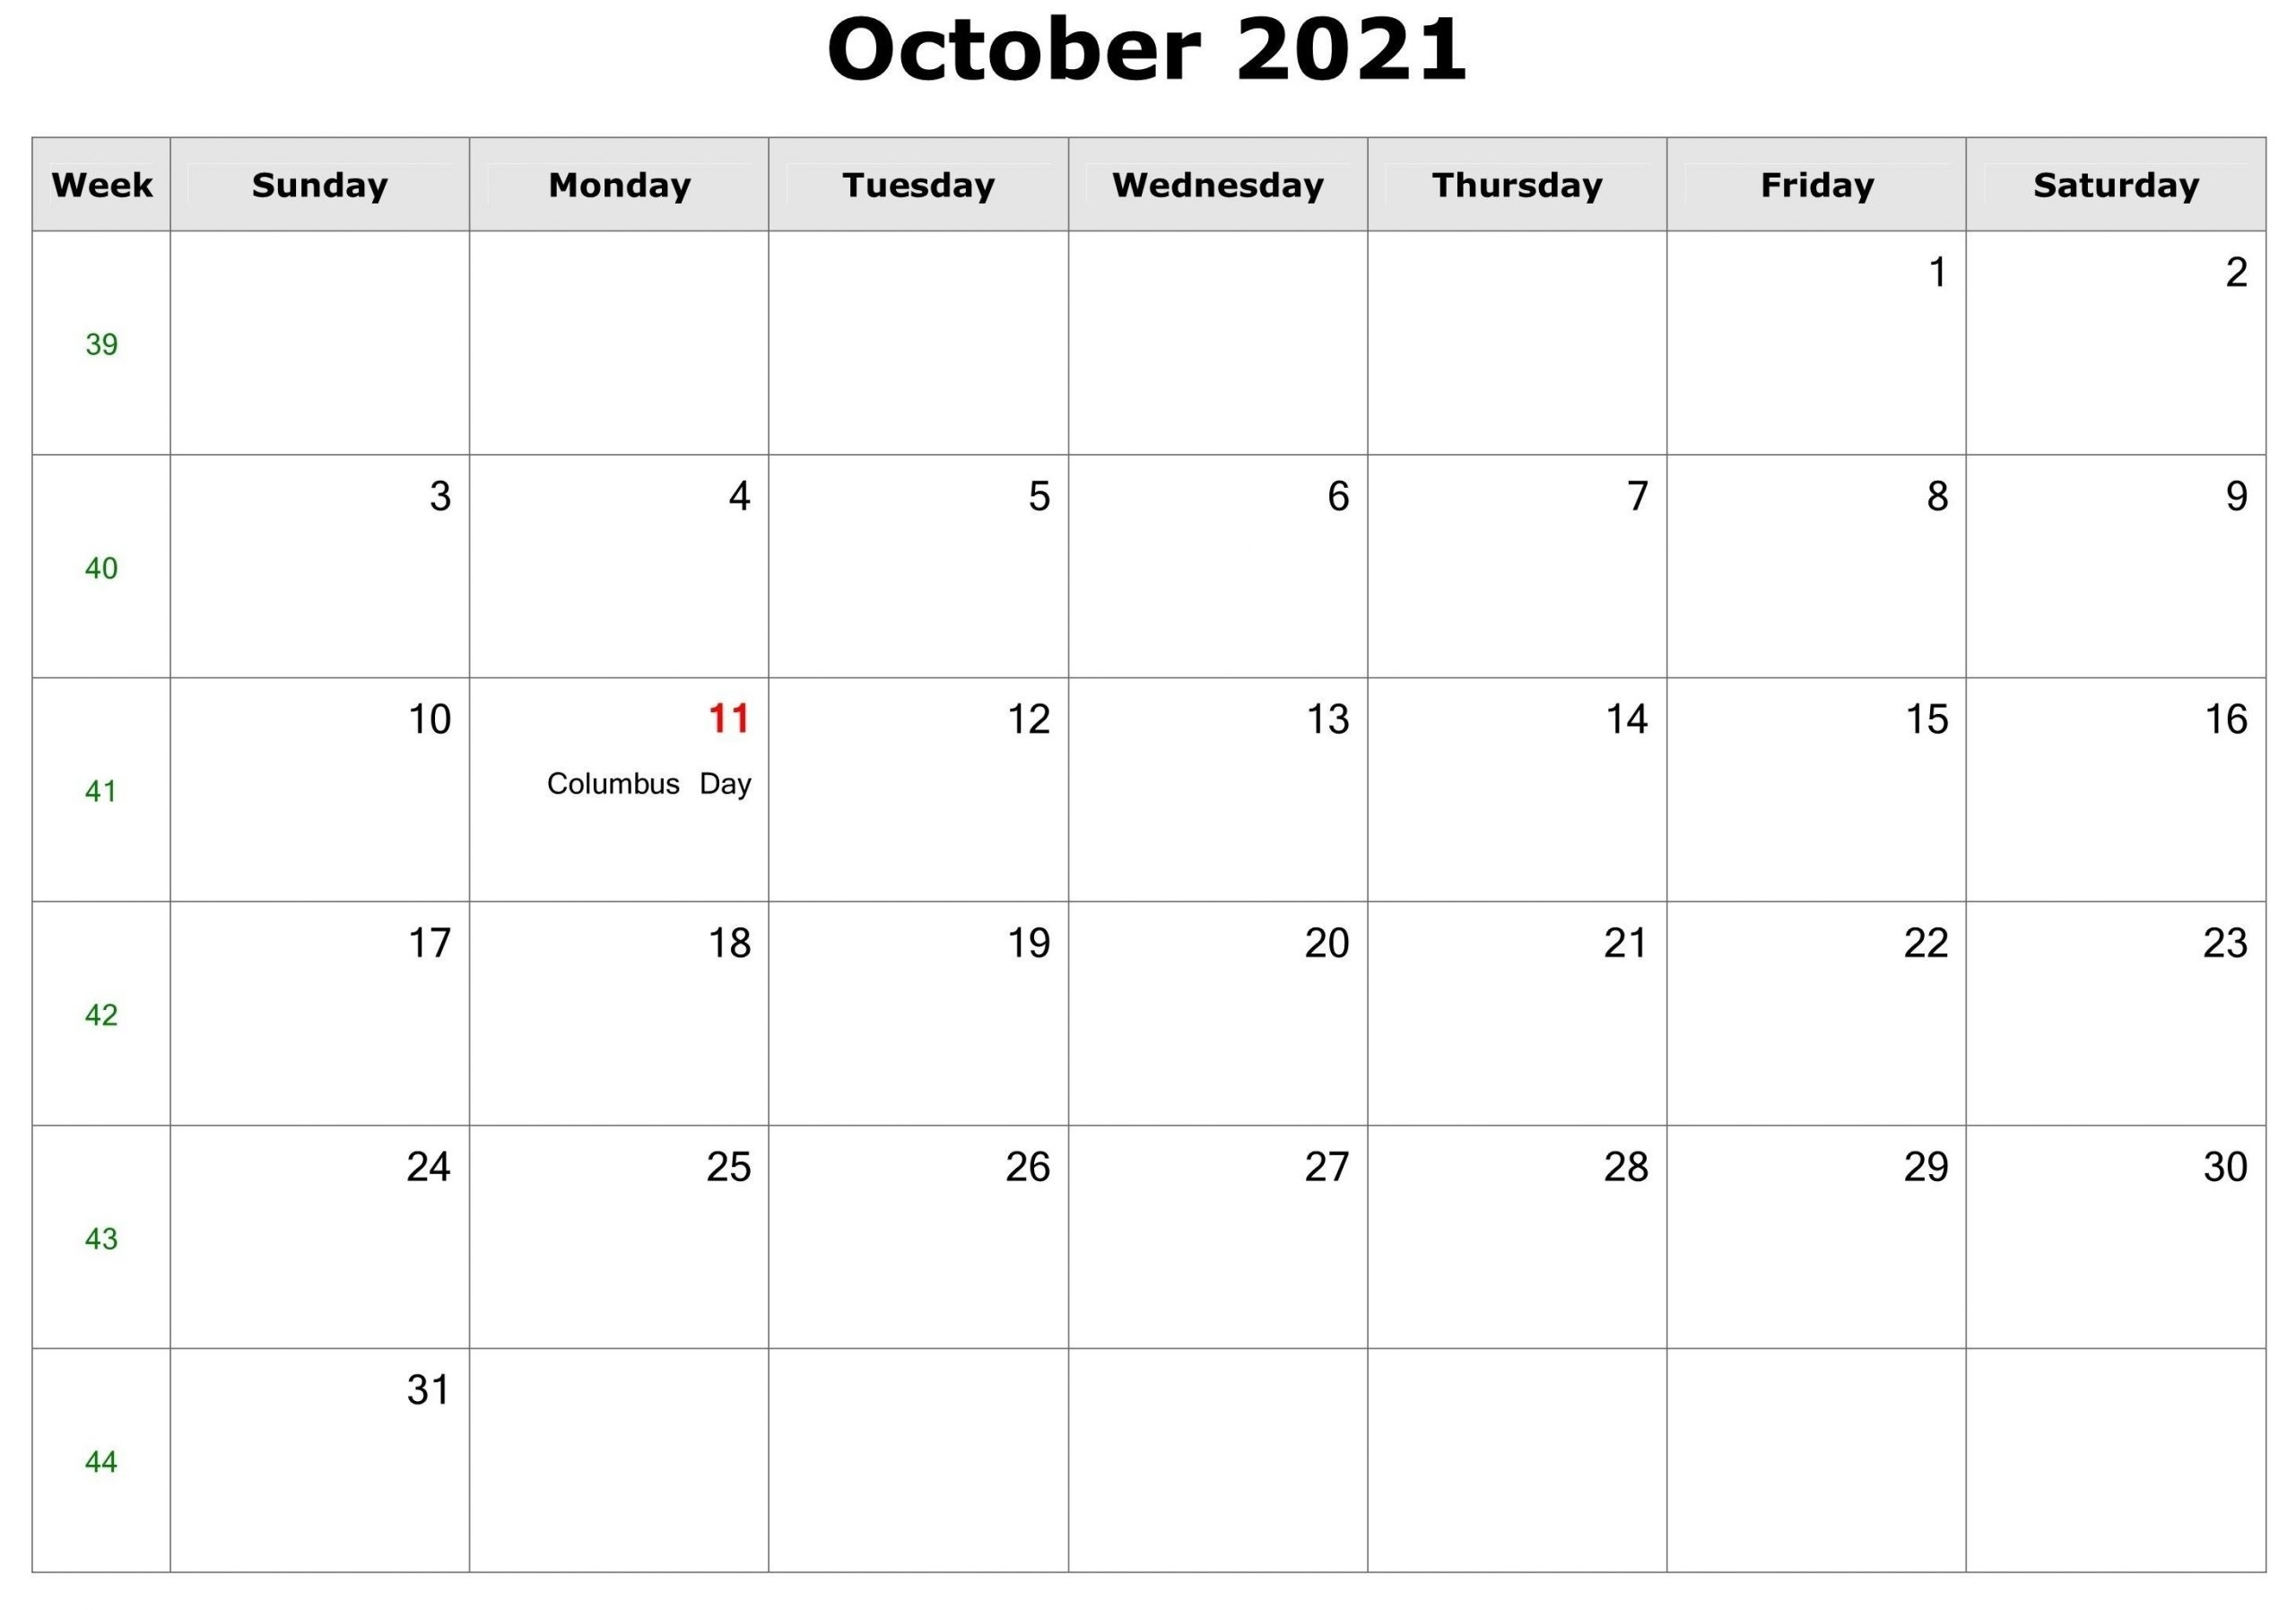 Free Free Blank Calendars 2021 That I Can Type On | Get Your Calendar Printable October 2021 Lunar Calendar